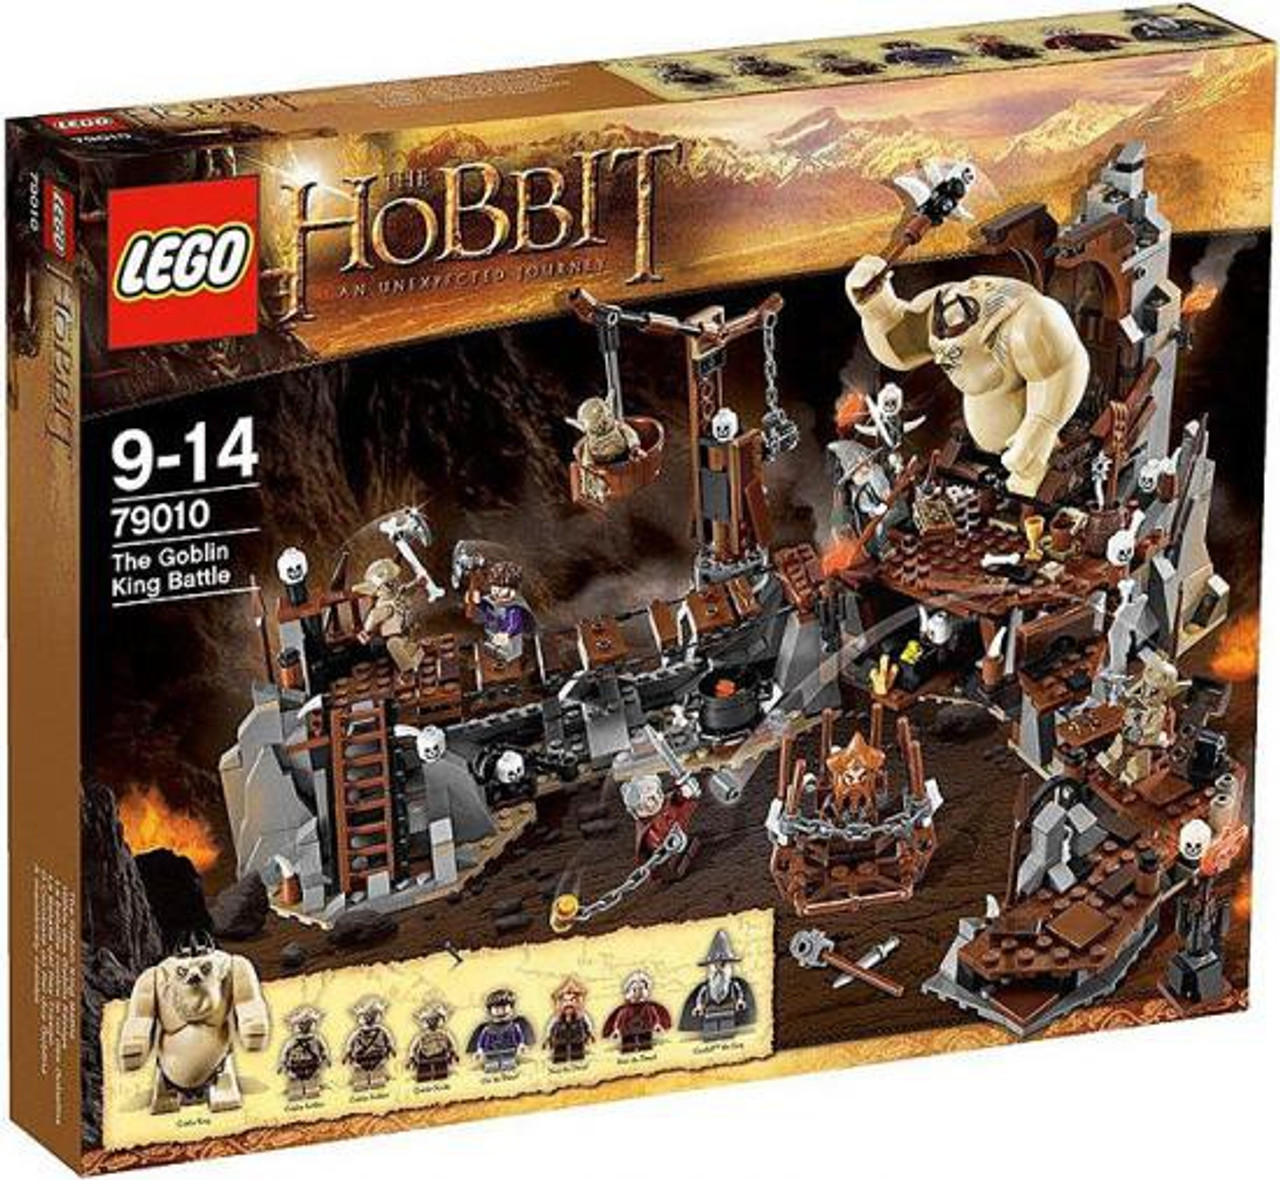 lego the hobbit sets the goblin king battle pack